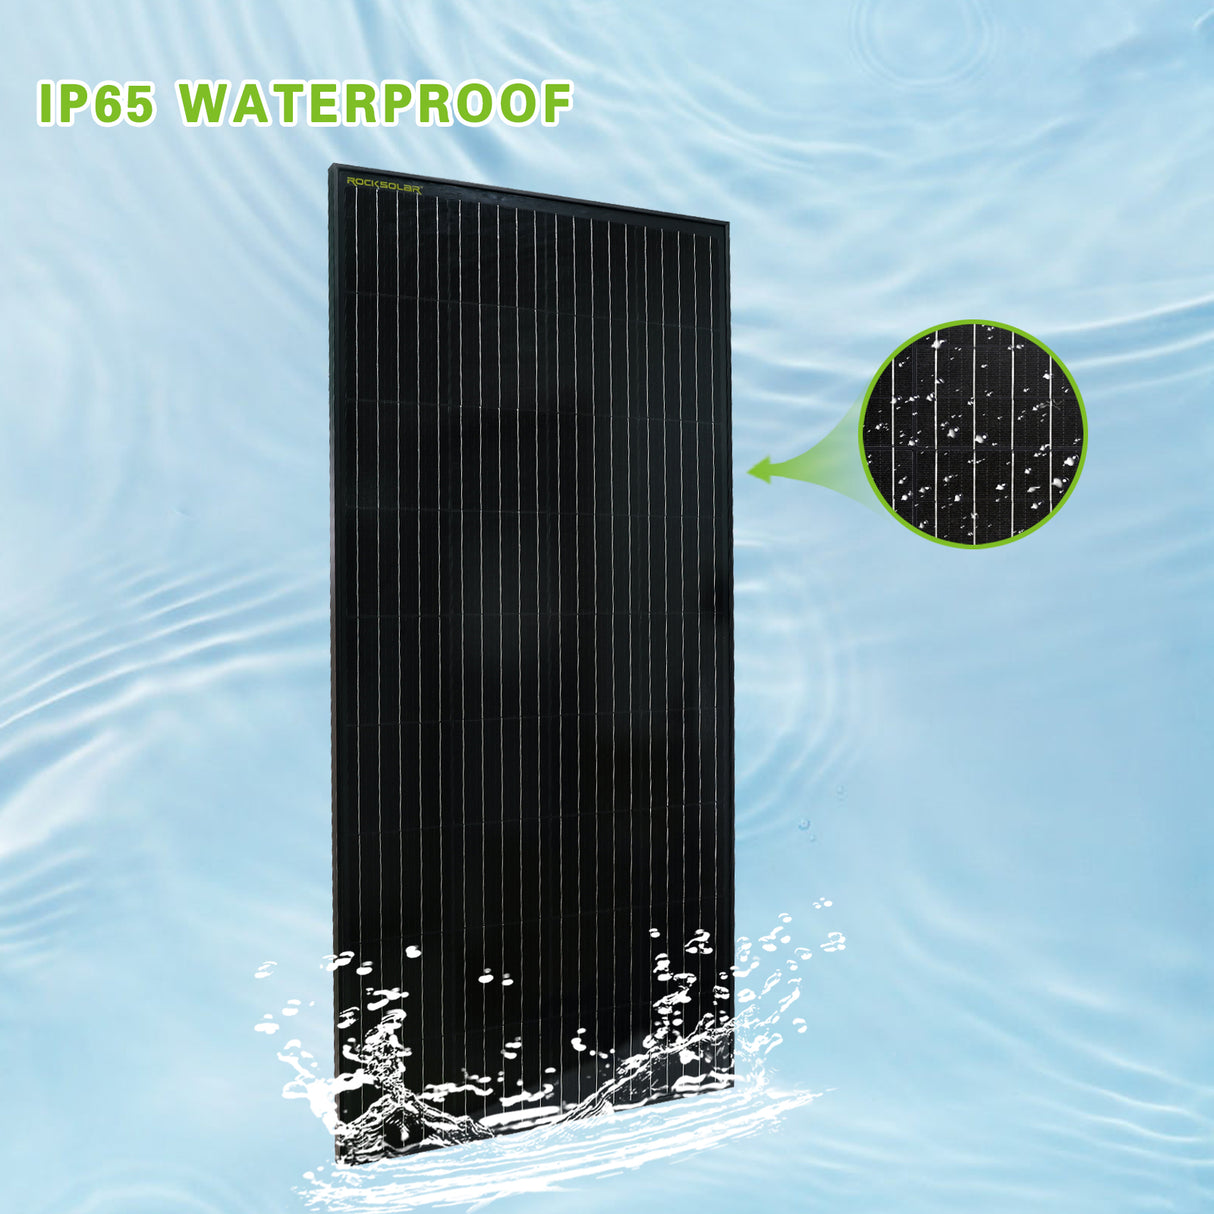 ROCKSOLAR 200W 12V Rigid Monocrystalline Solar Panel - Waterproof with Corrosion-Resistant Aluminum Alloy Frame